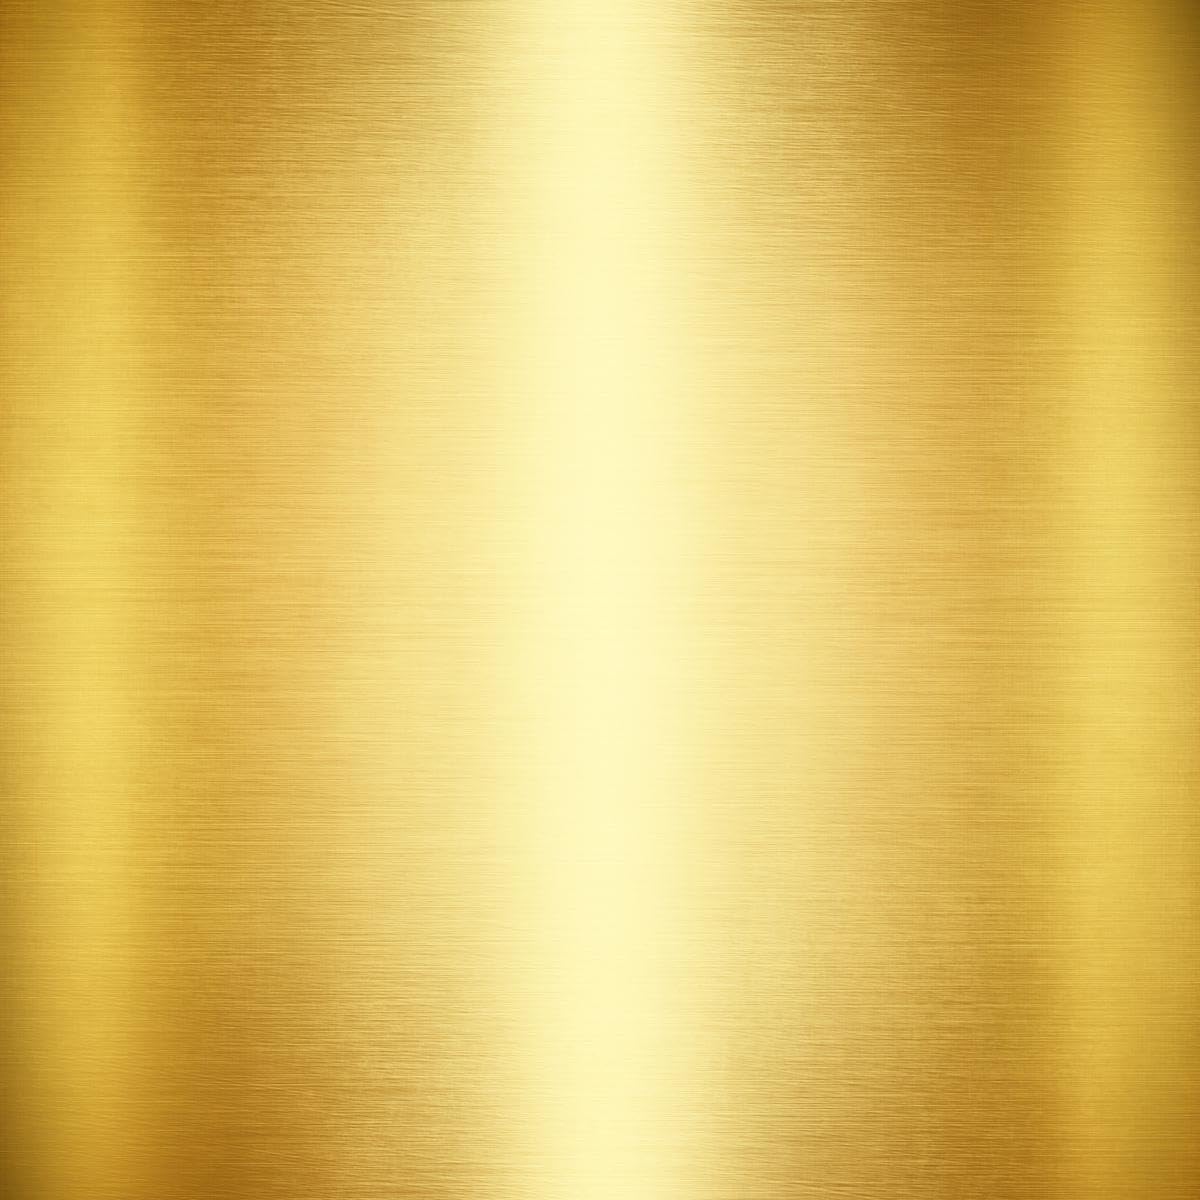 Matthews Fan BD-GOLD-MTL Bianca Direcional ceiling fan in Ouro (Gold) finish with metal blades.